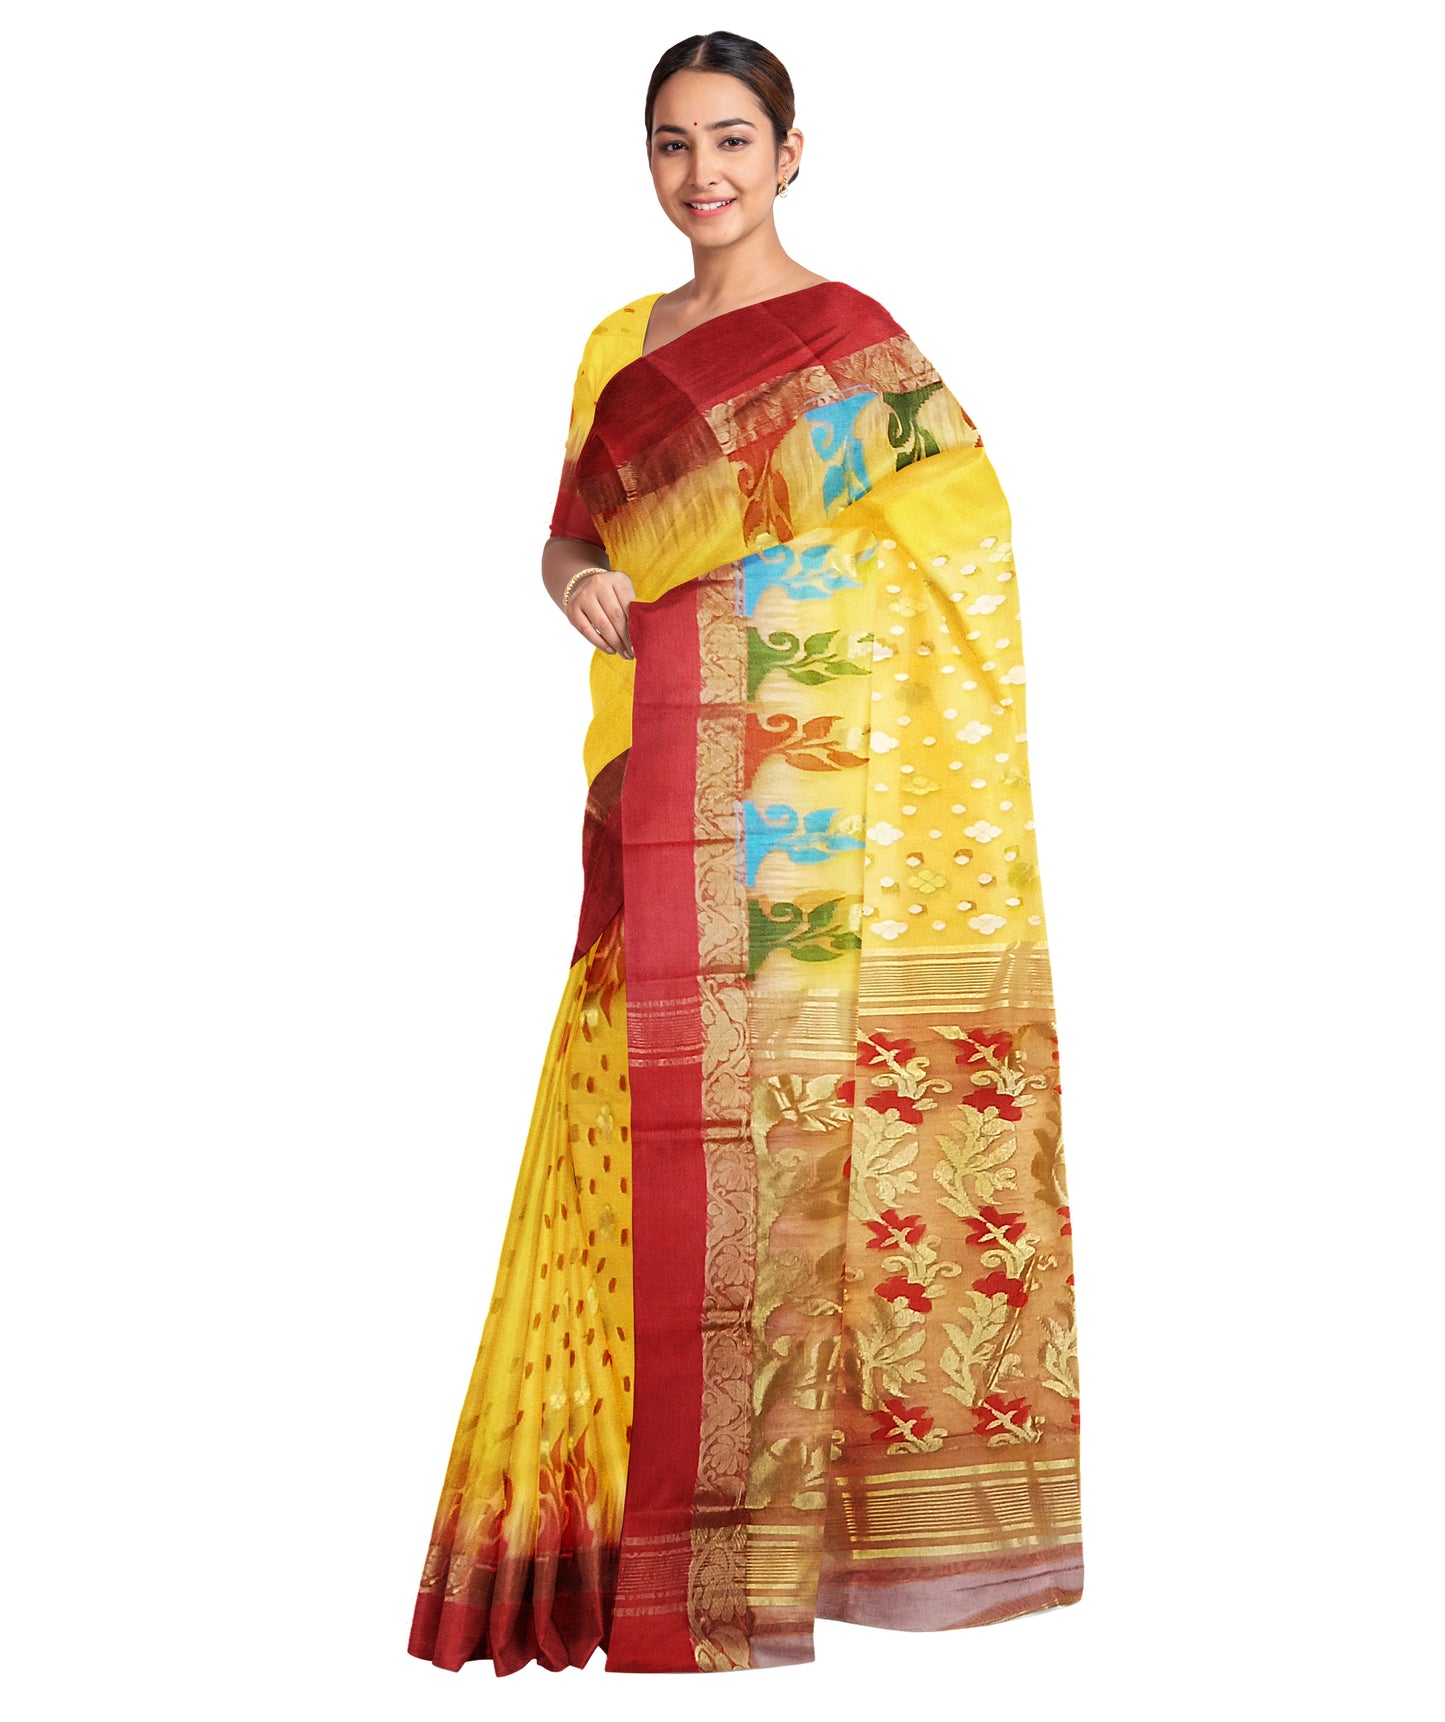 Pradip Fabrics Ethnic Women's Tant Silk Yellow Body and Red Par Saree